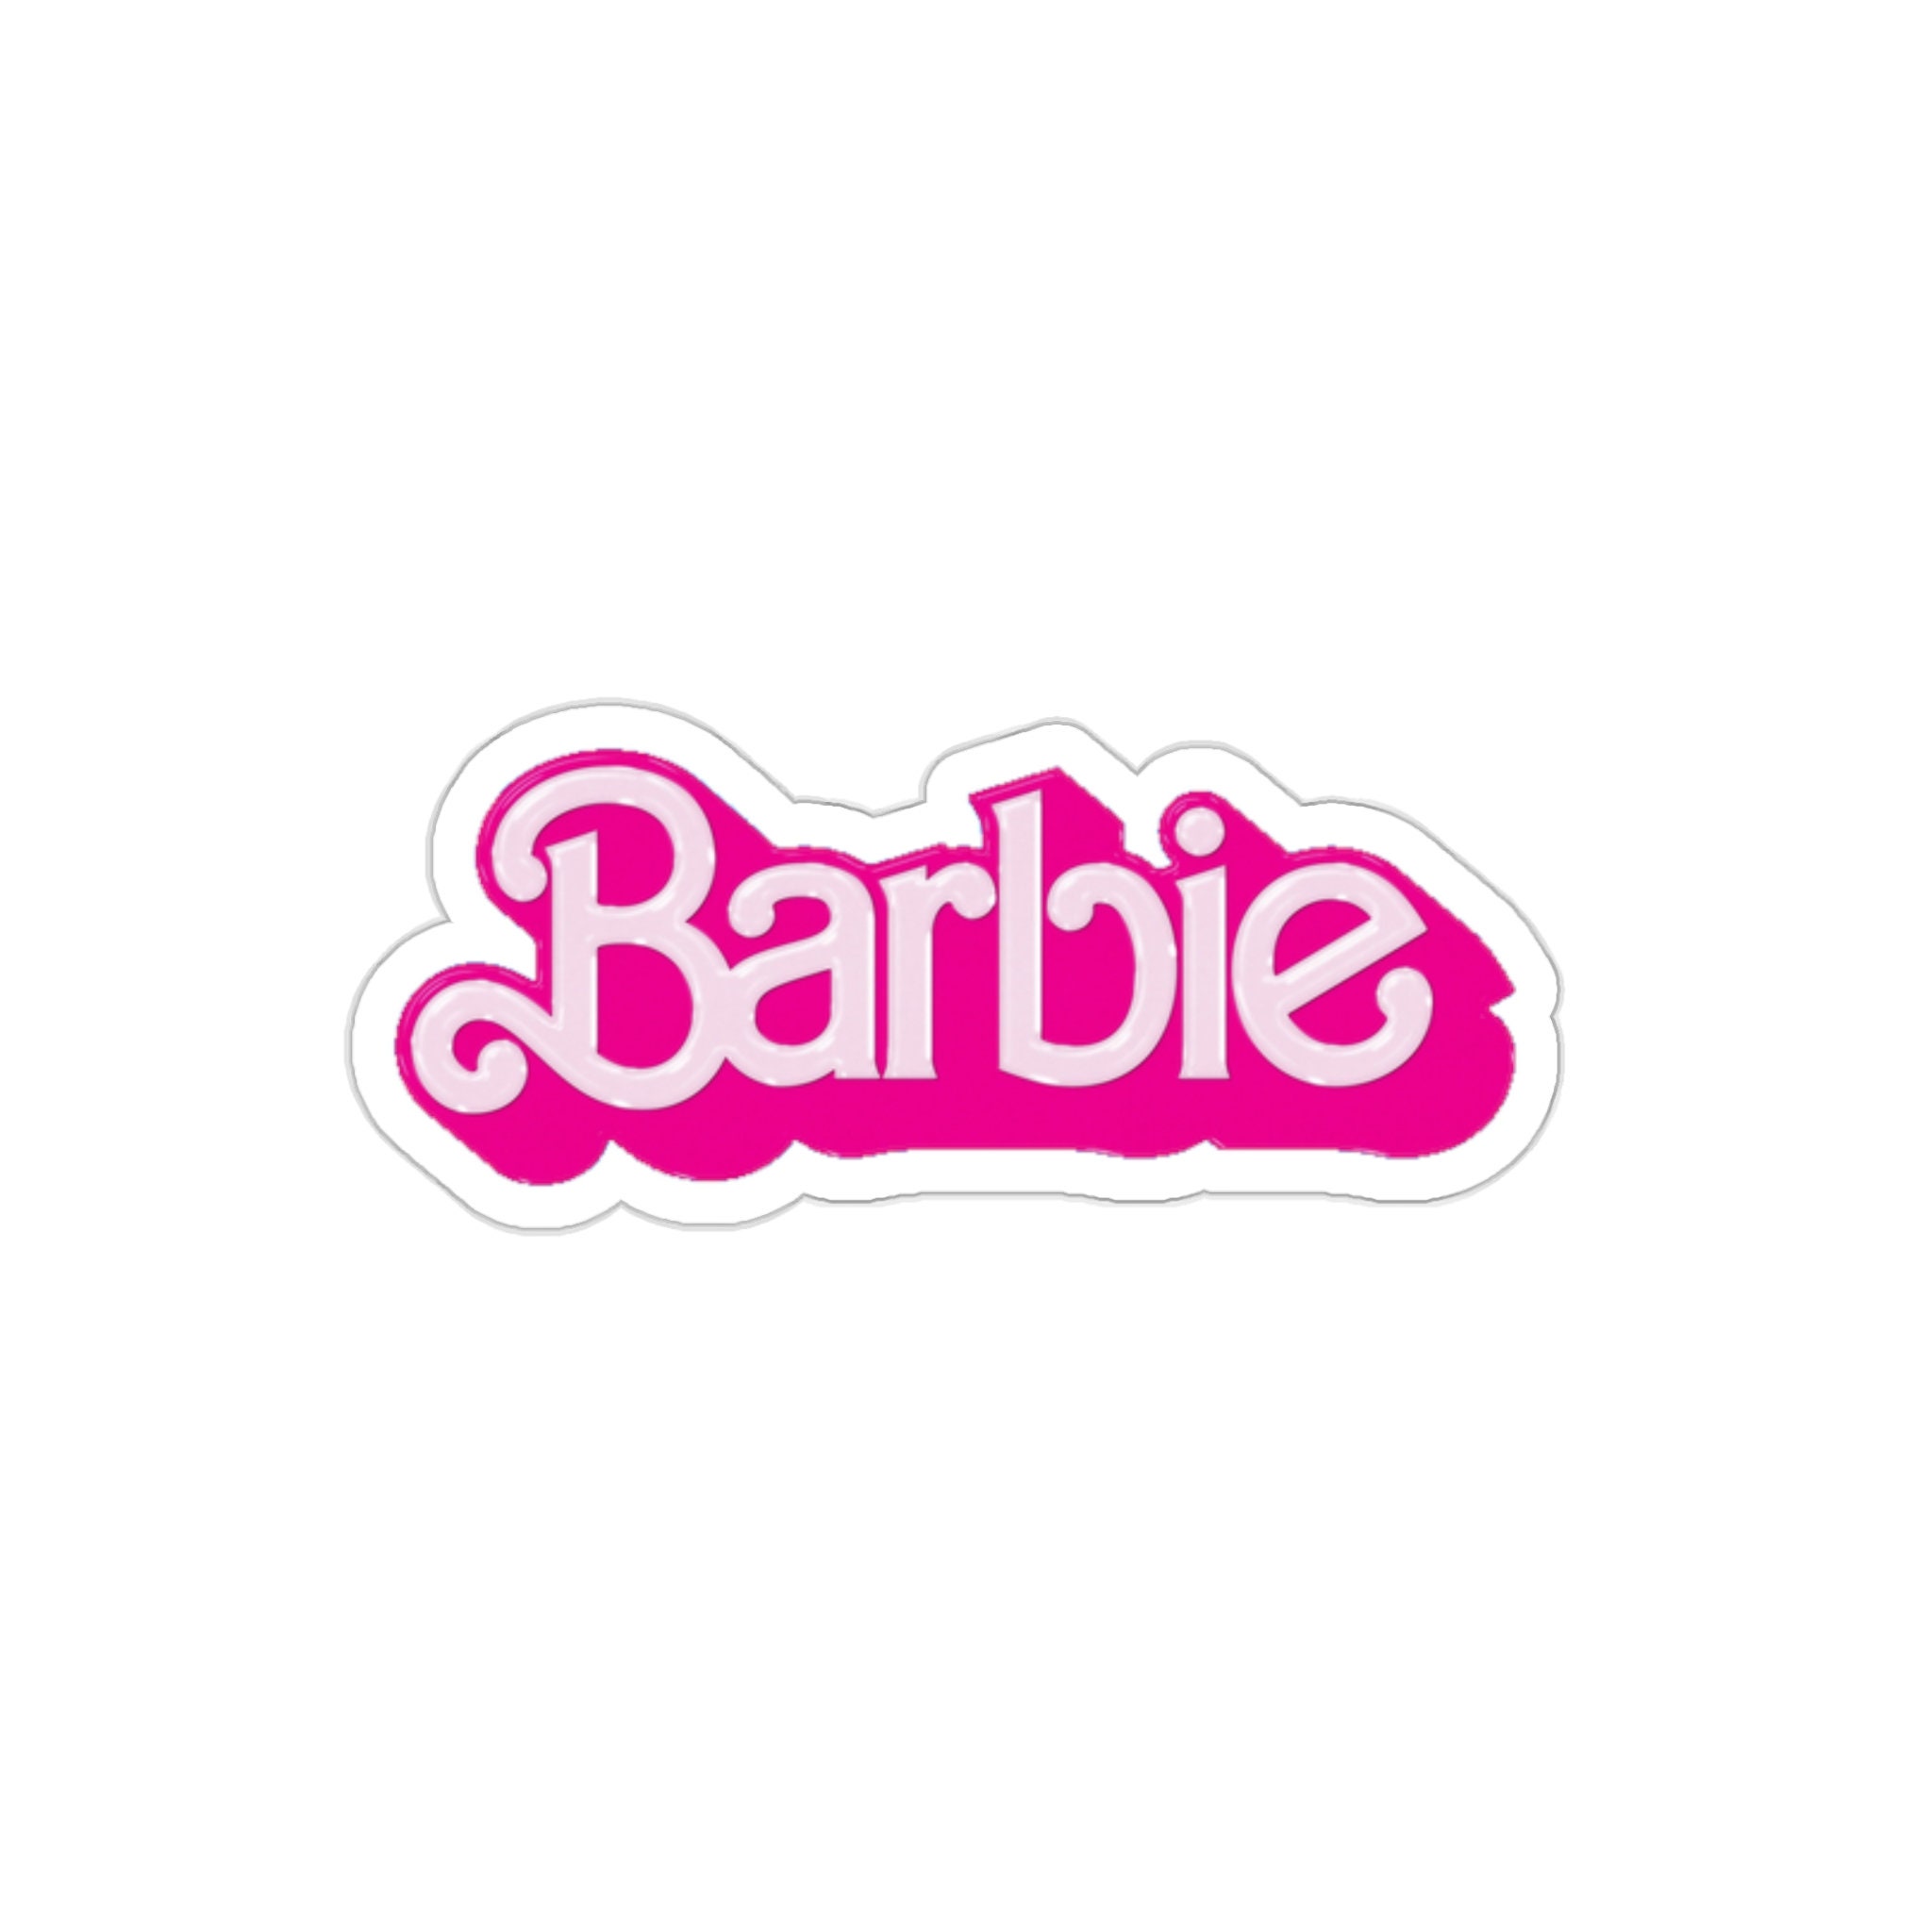 Barbie Sticker Laptop Stickers Vinyl Stickers Book Stickers - Etsy